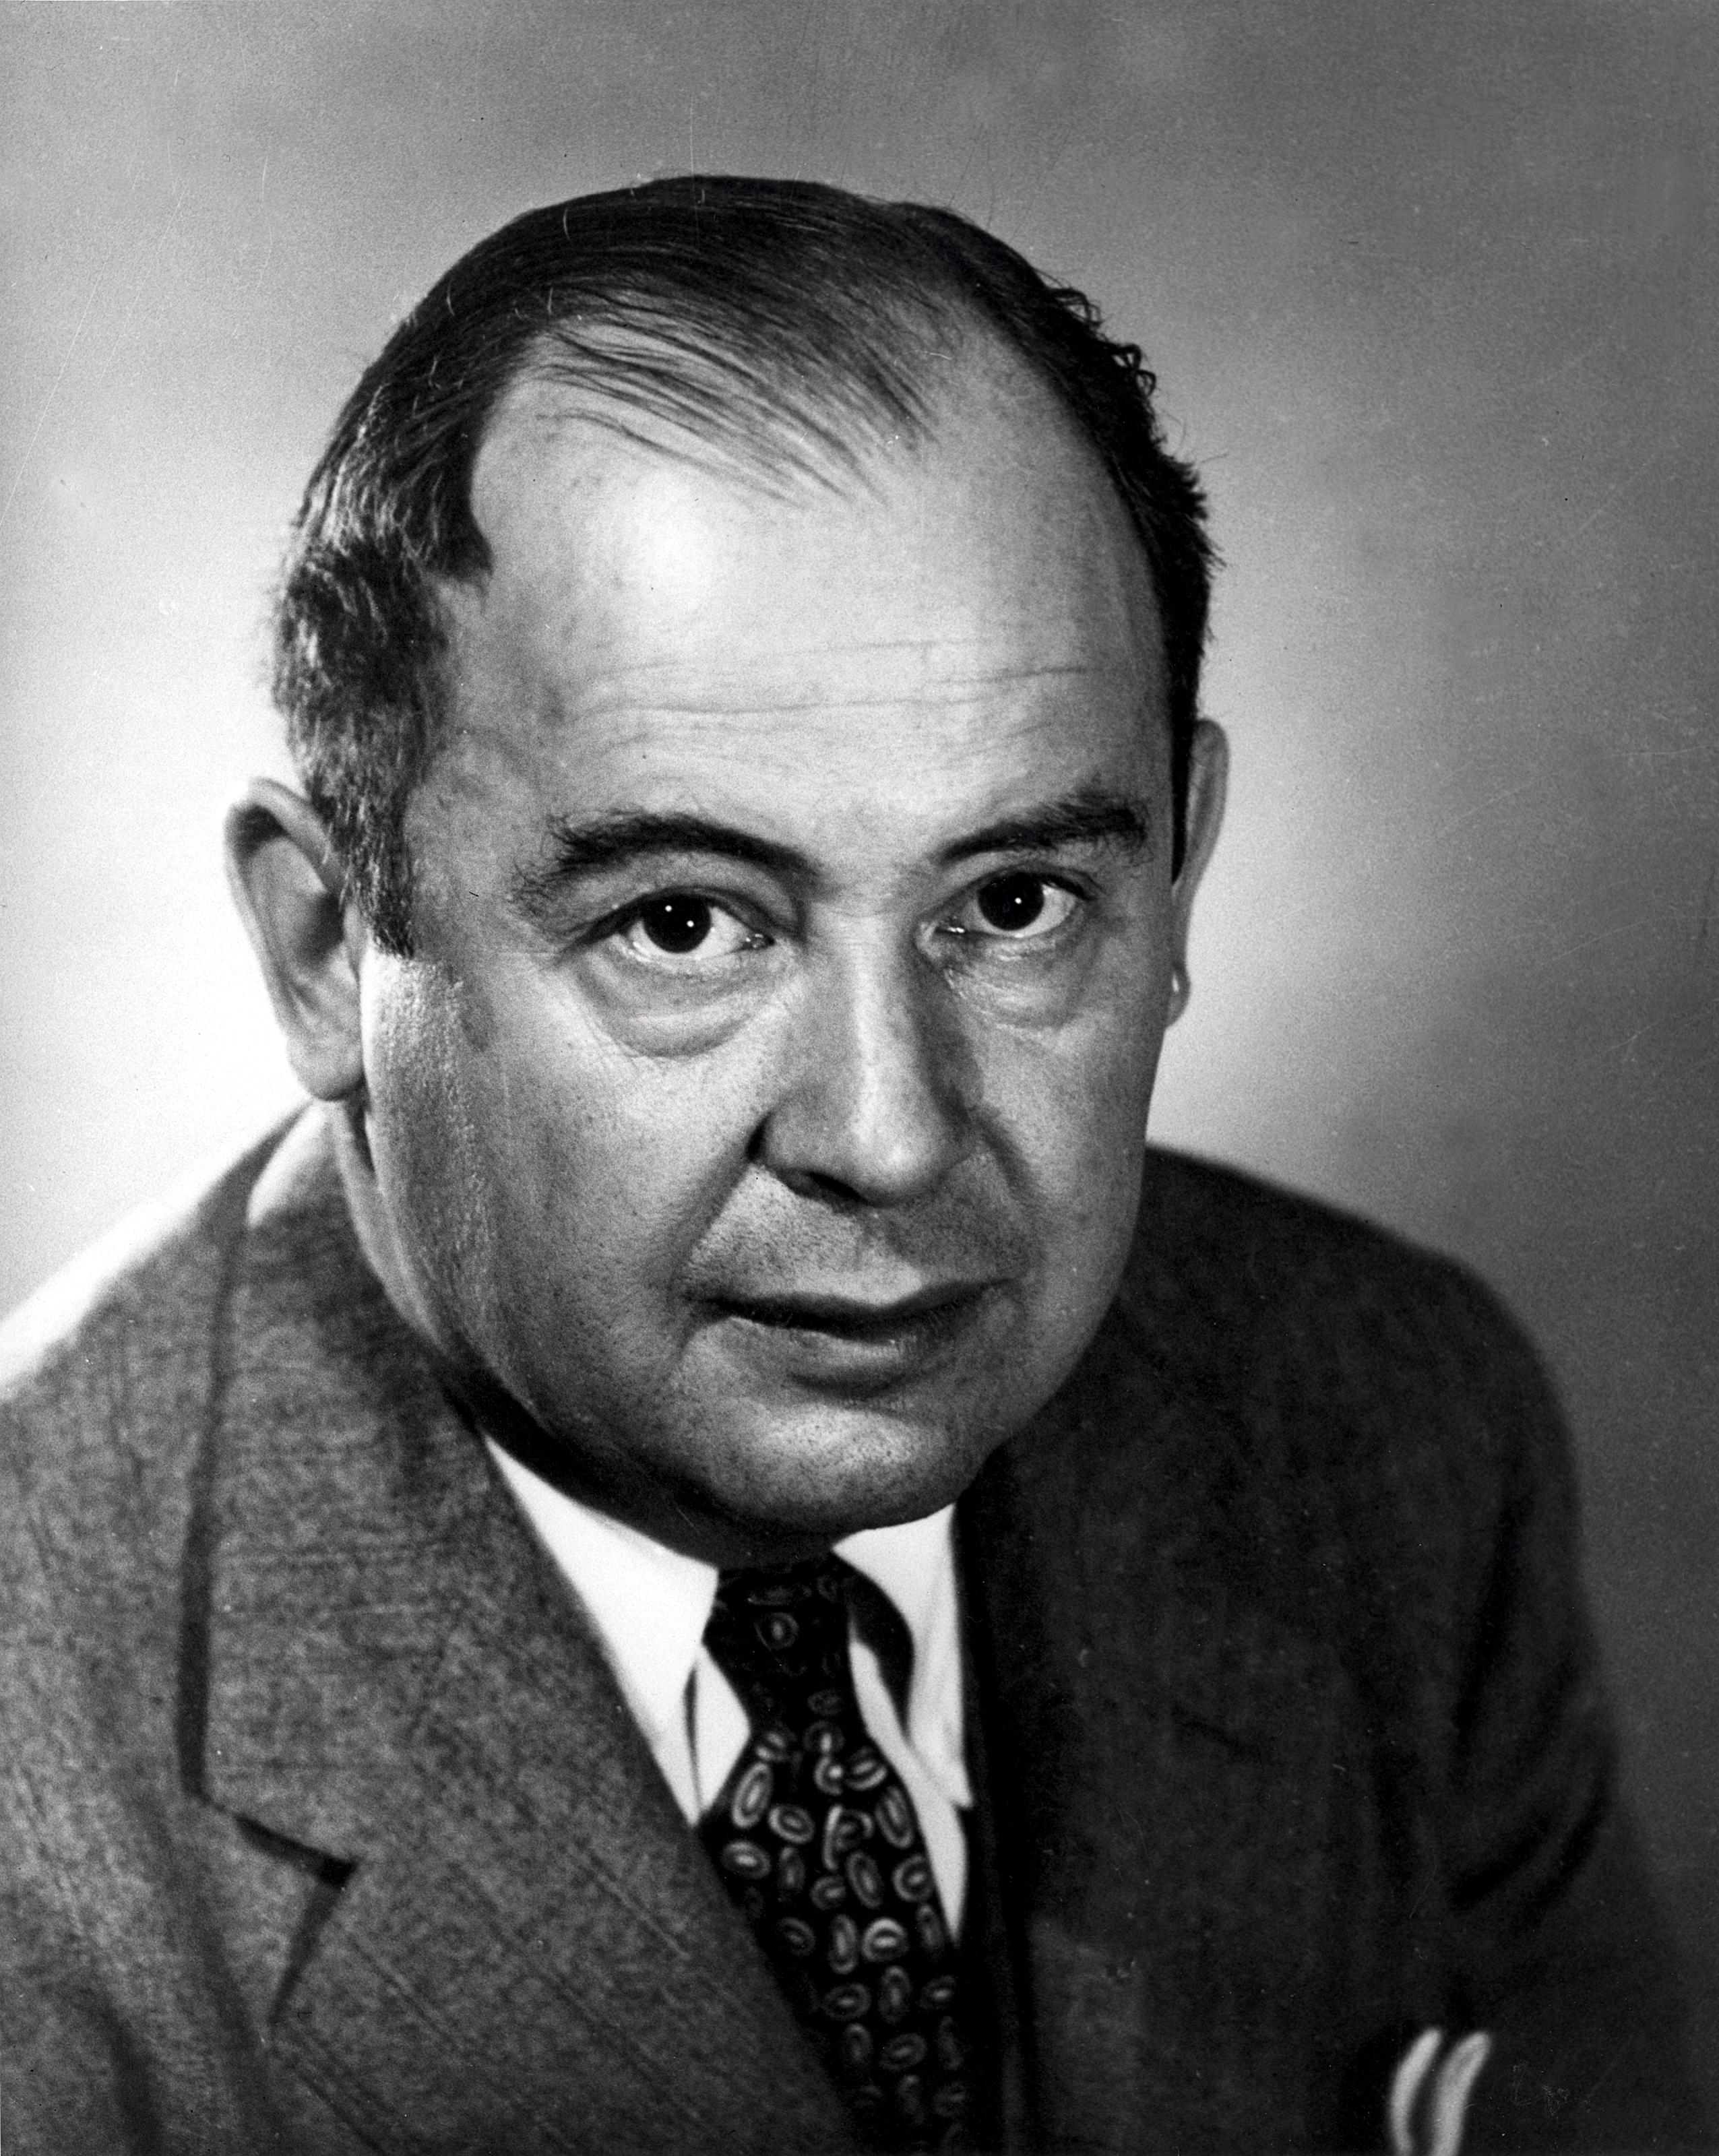  Biografi om John von Neumann